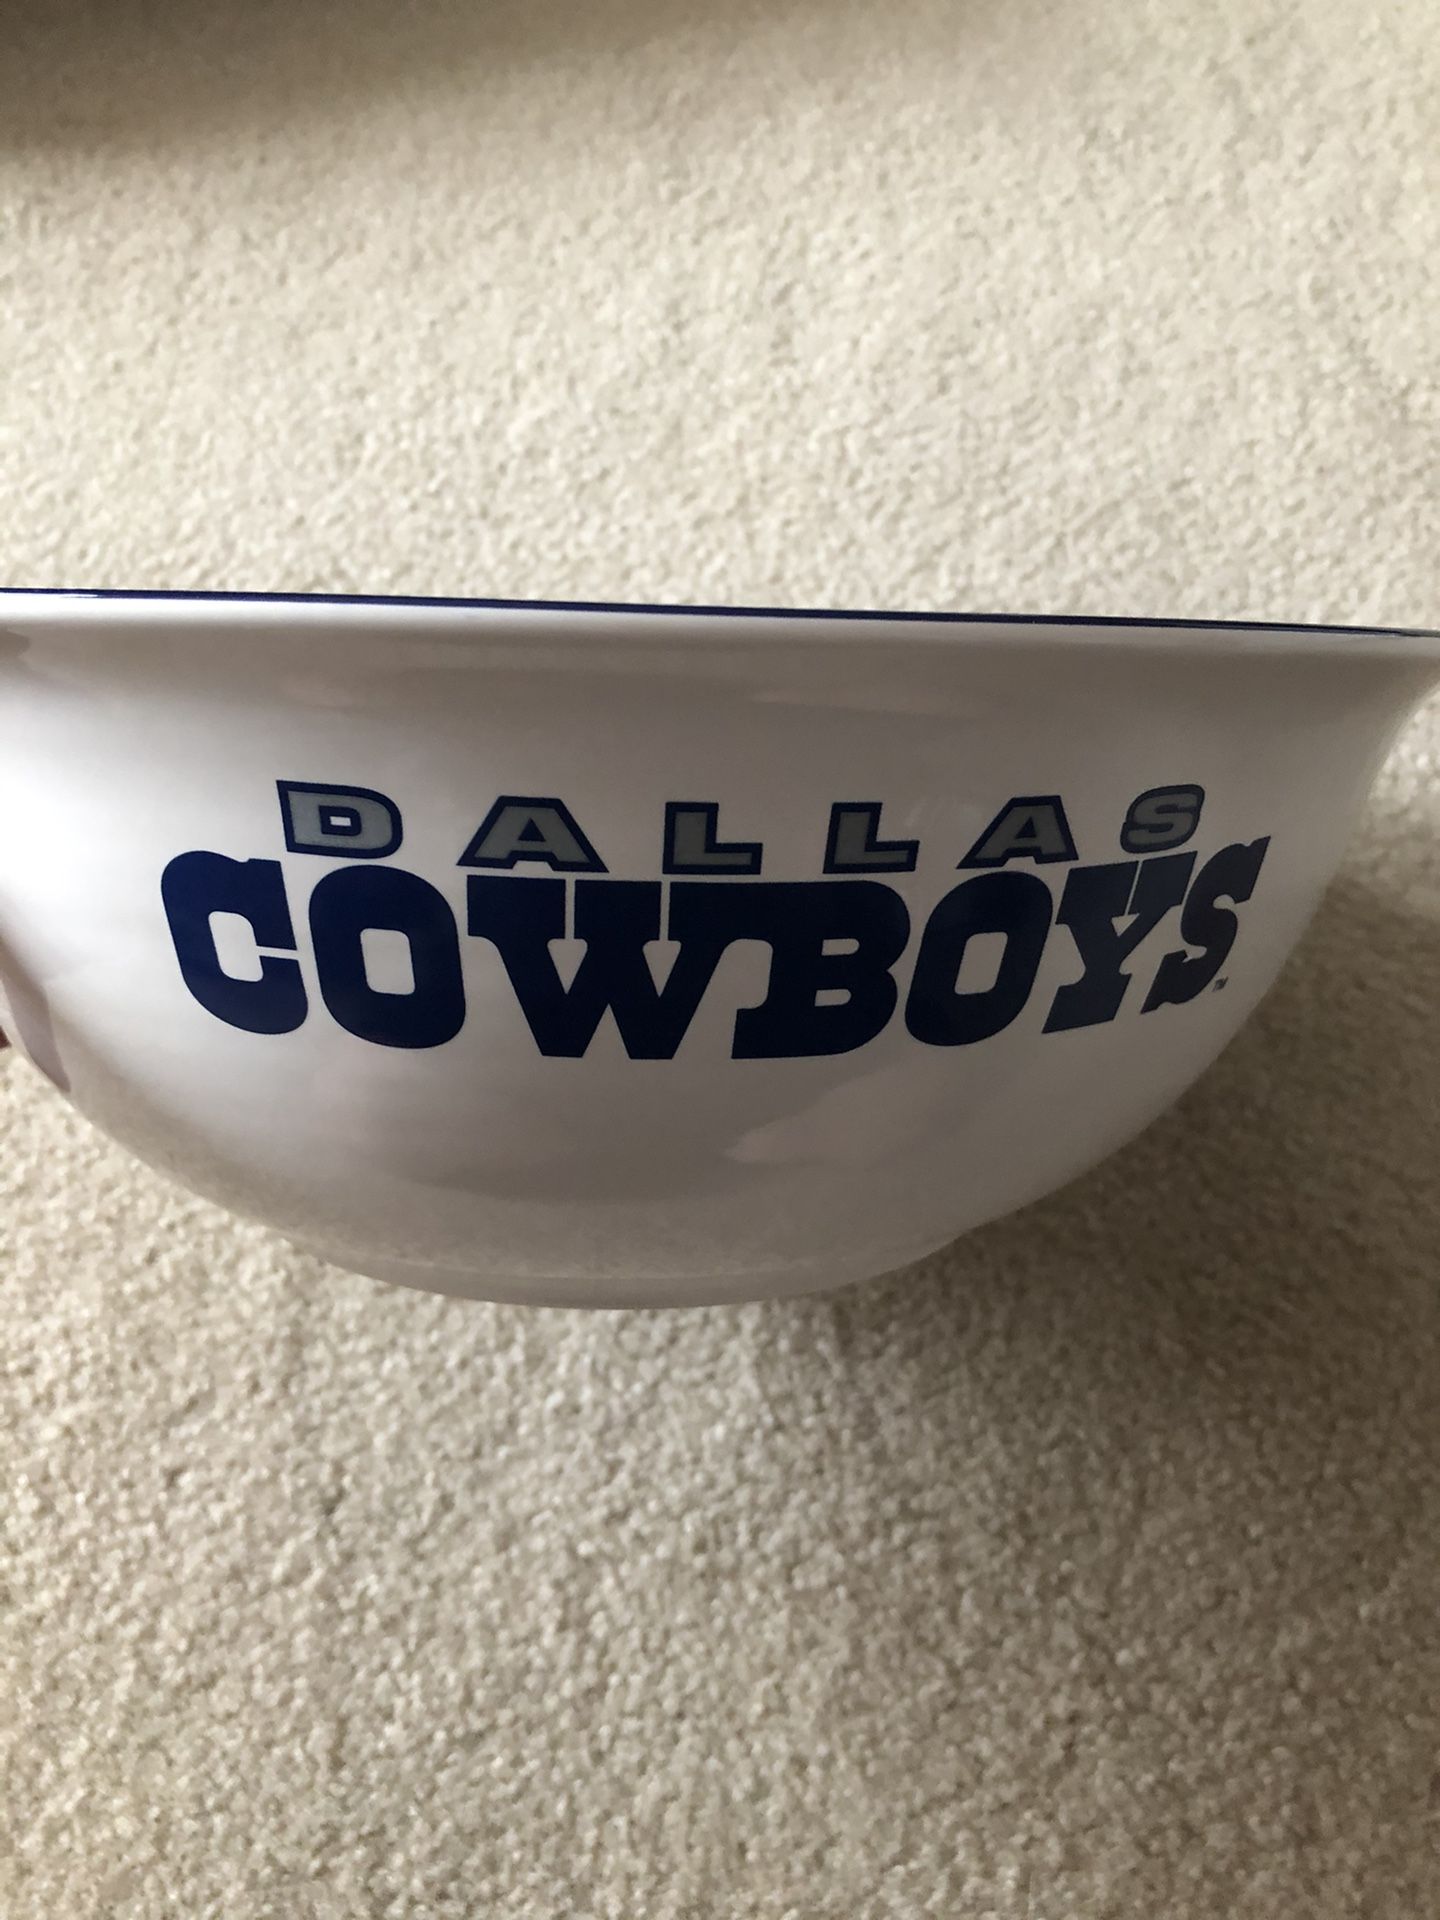 Pflatzgraff Dallas Cowboys Party Bowl